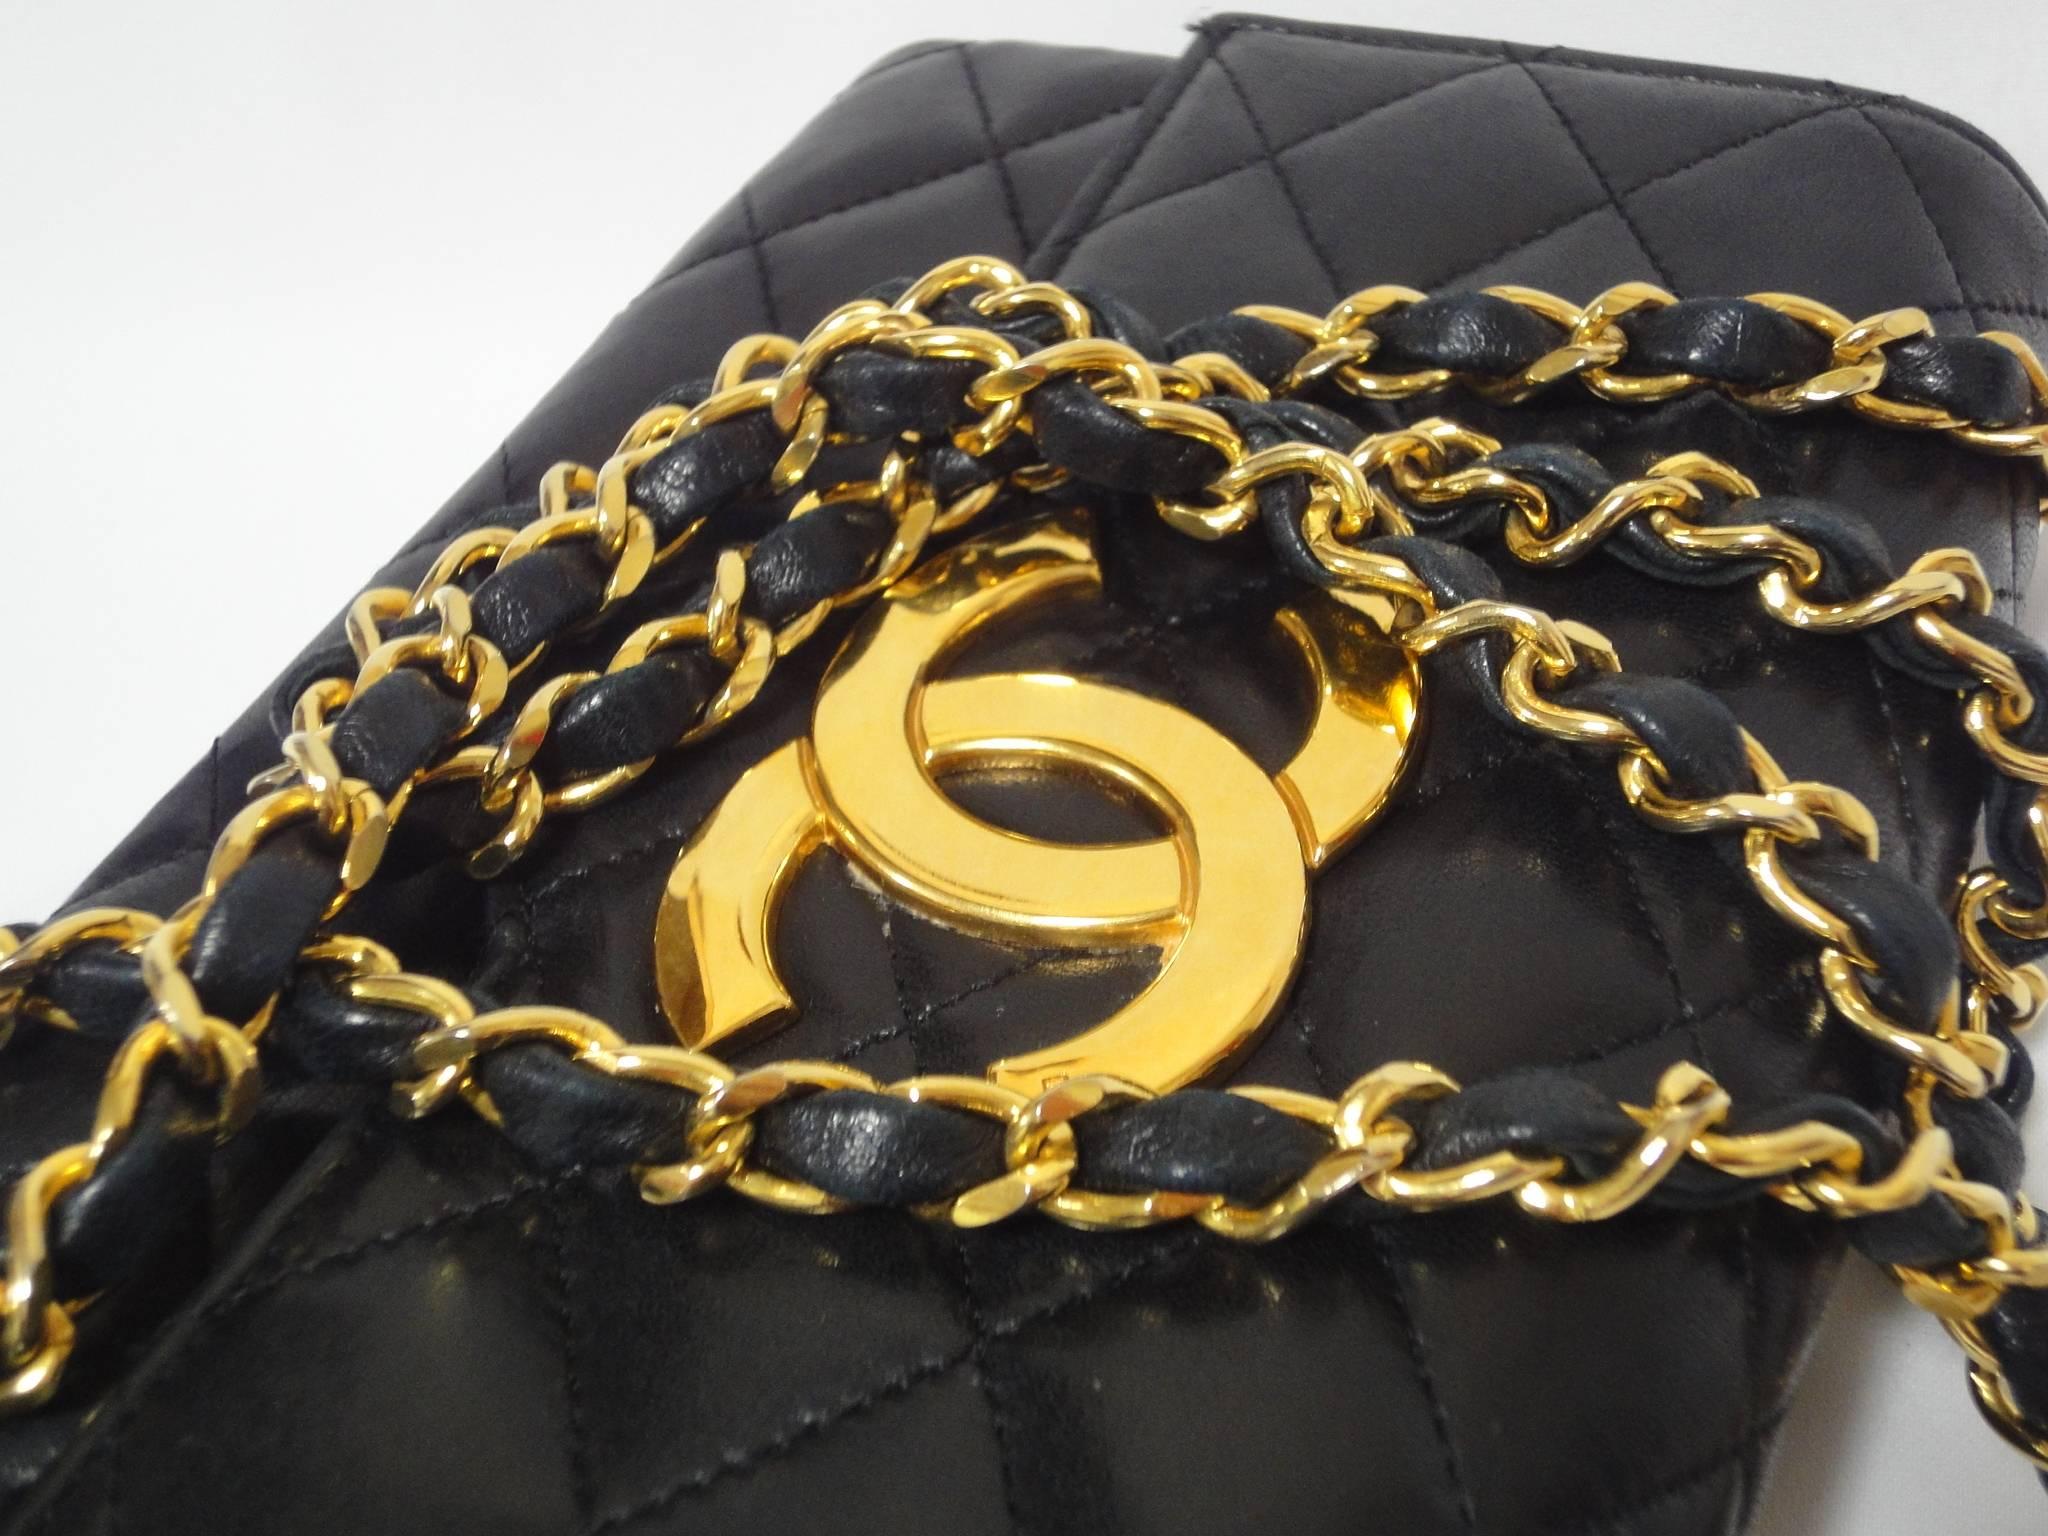 MINT. 80's vintage CHANEL black lambskin chain shoulder bag with golden large CC 2